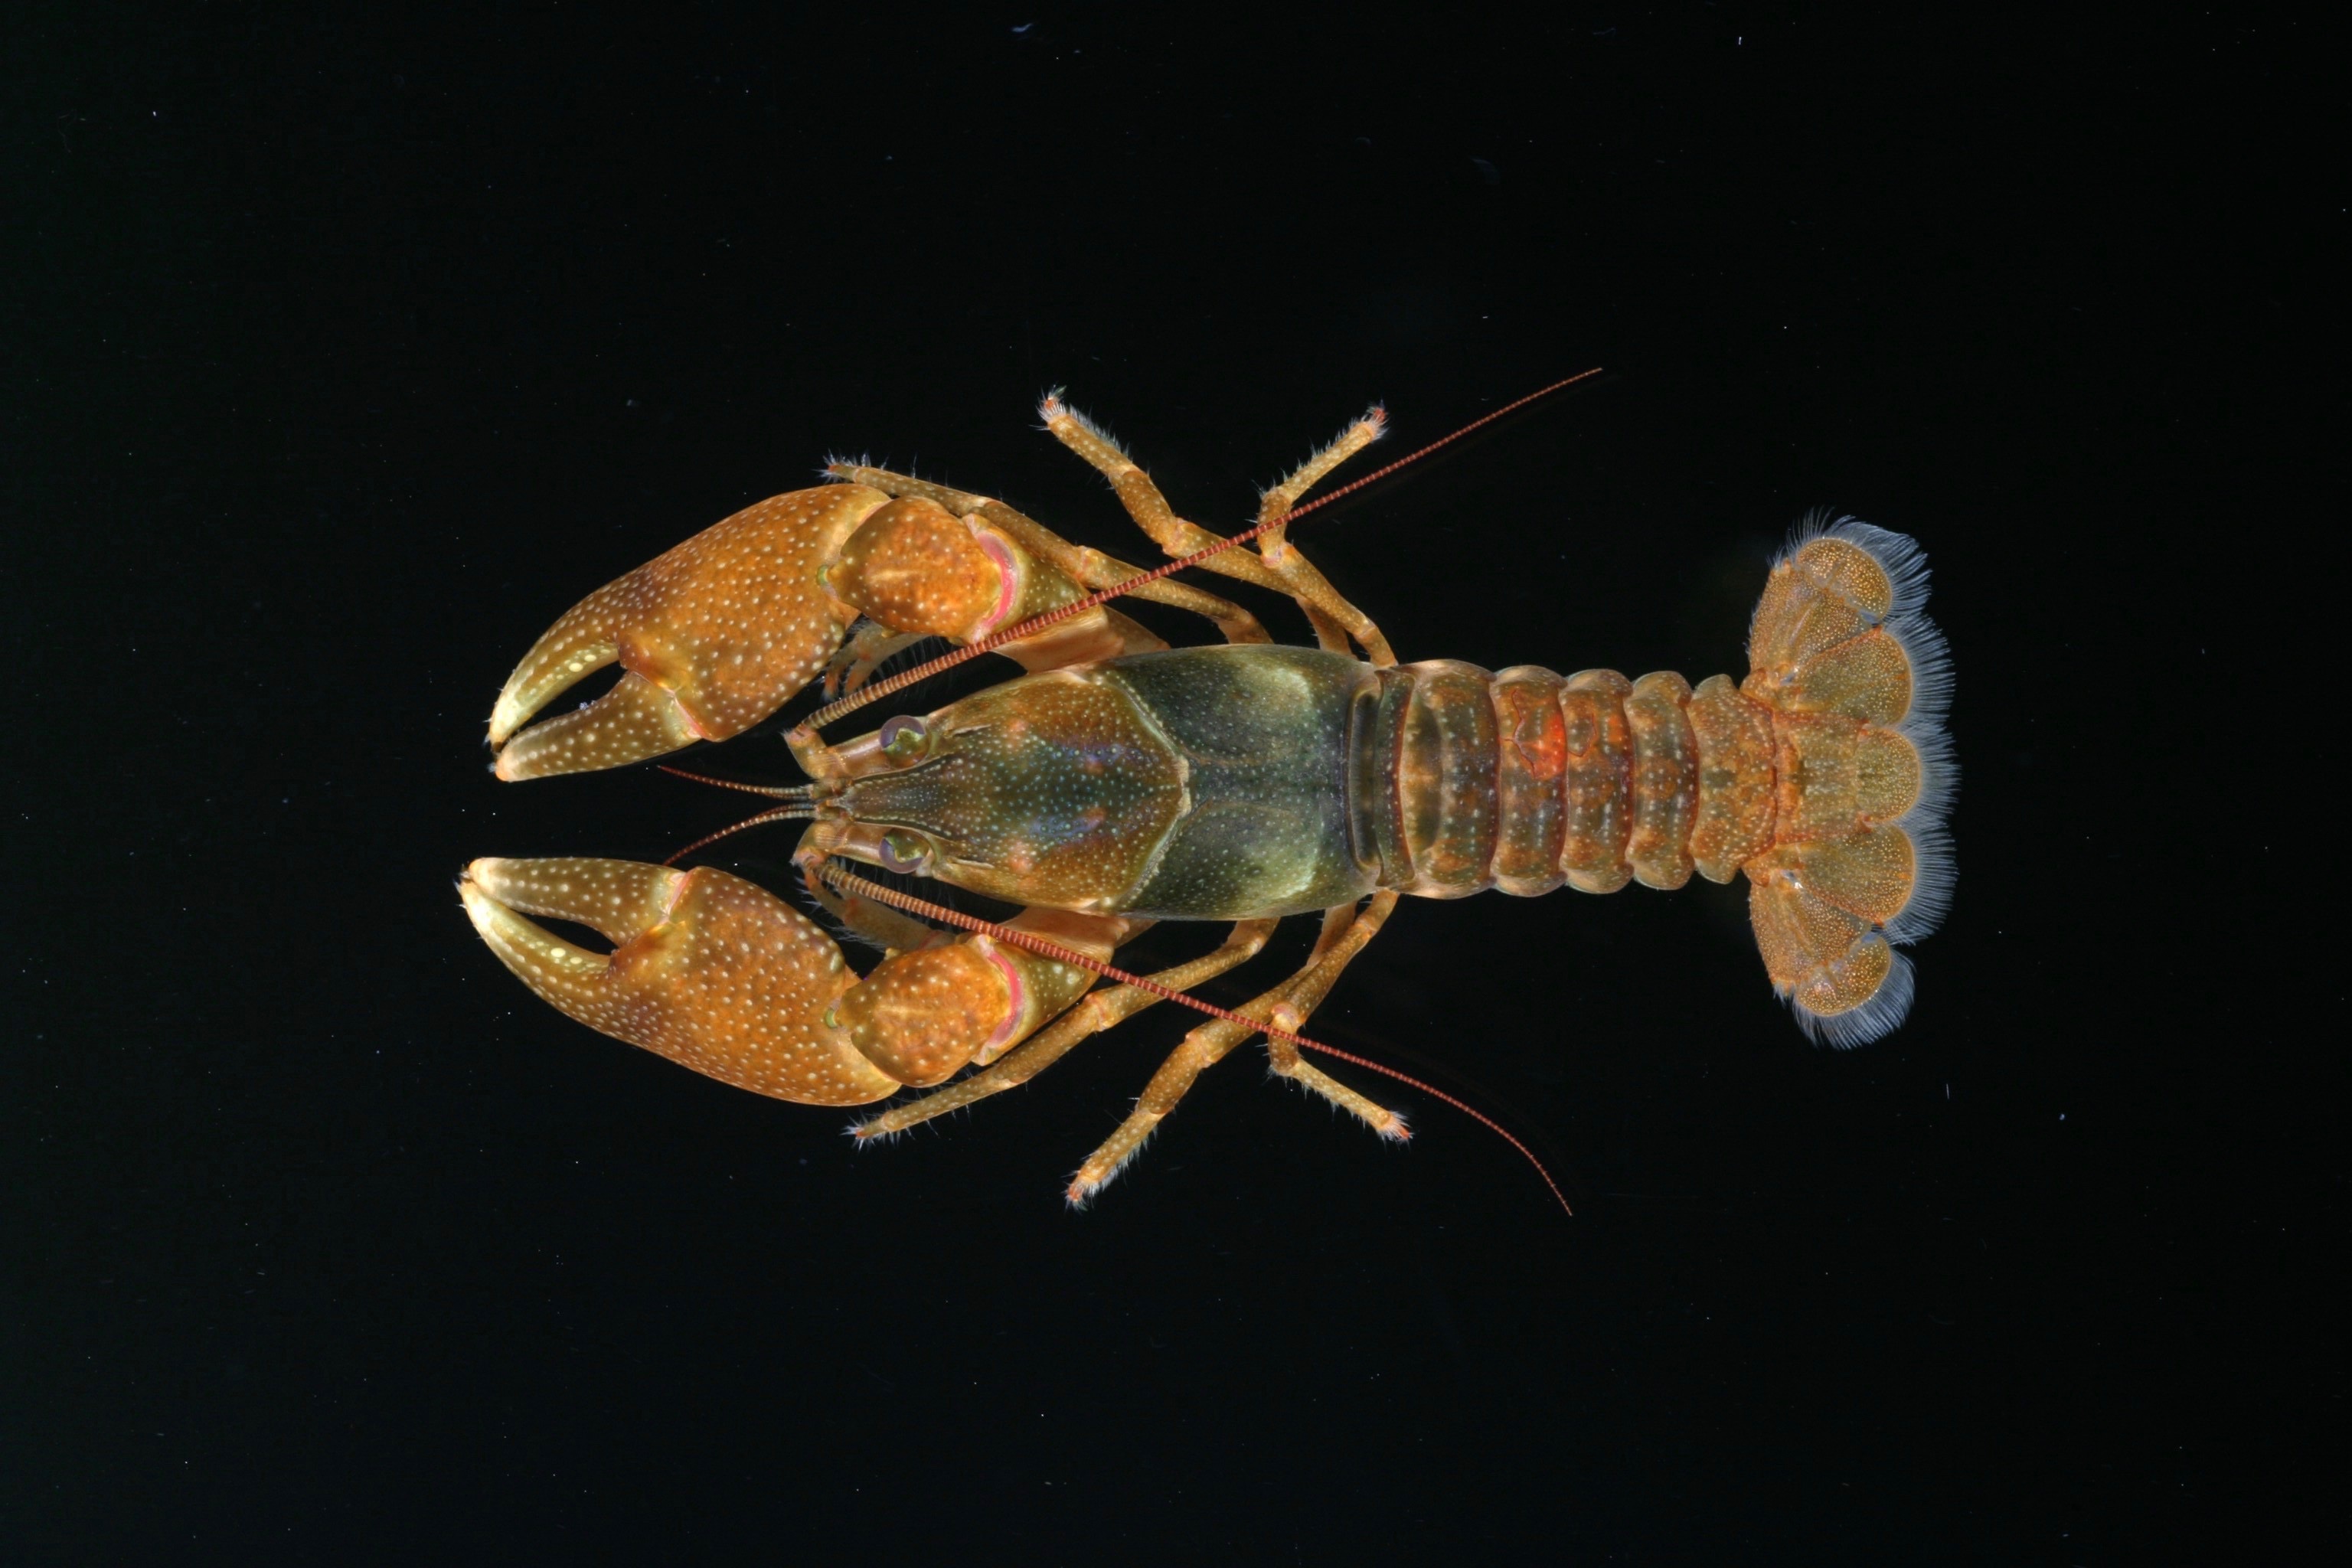 Crayfish sits on specimen board